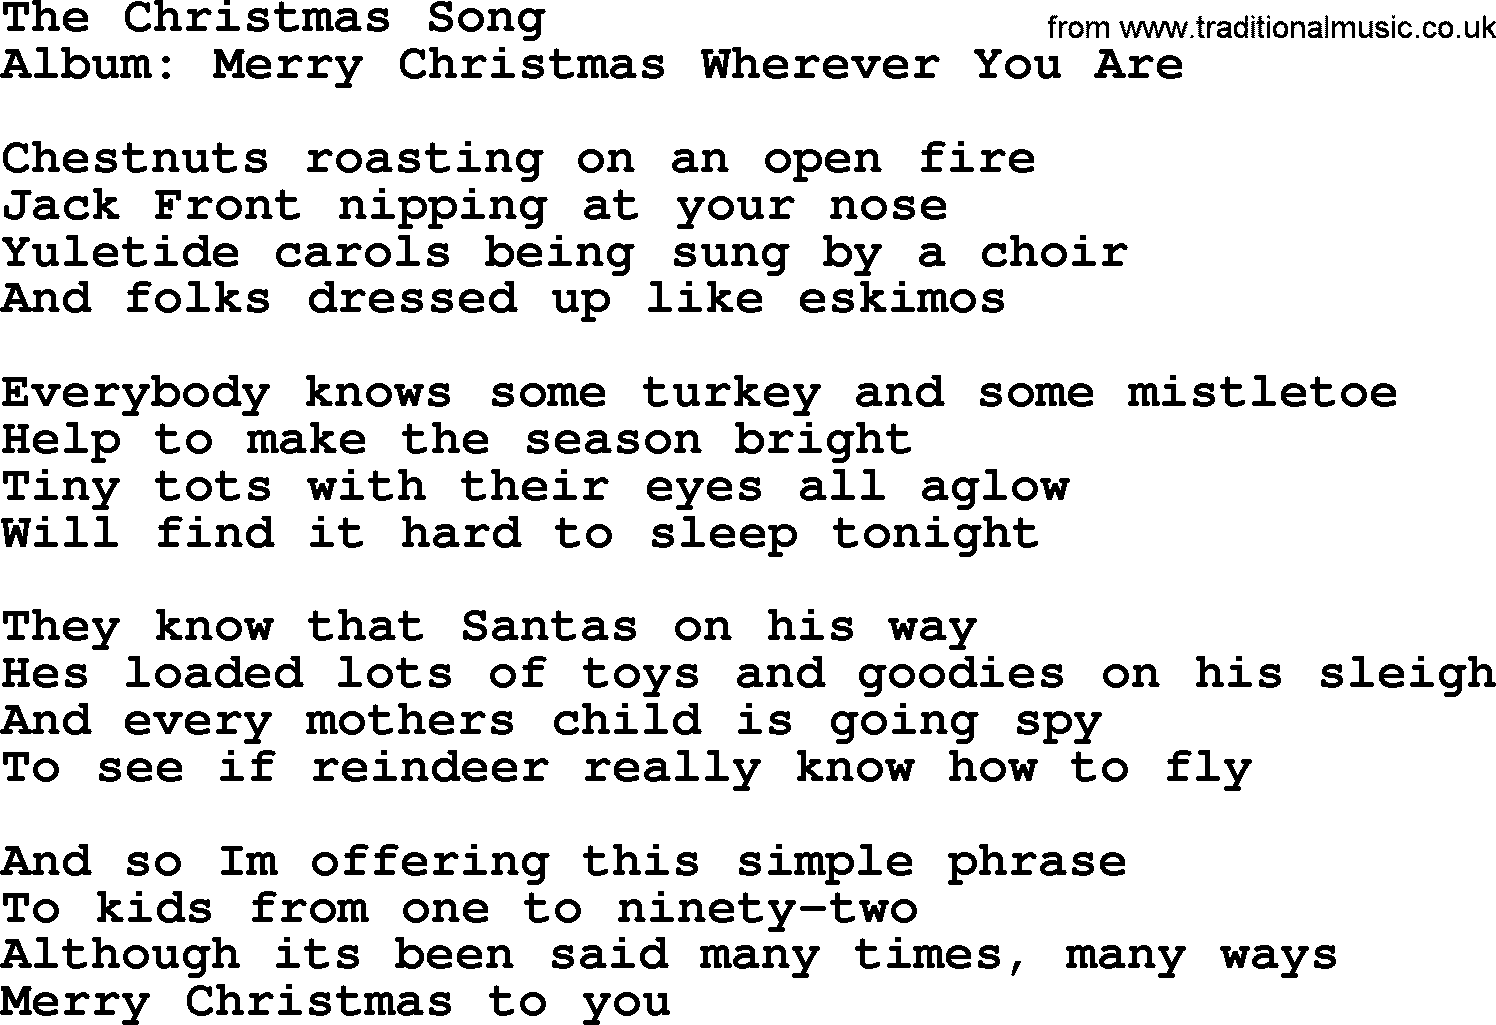 George Strait song: The Christmas Song, lyrics